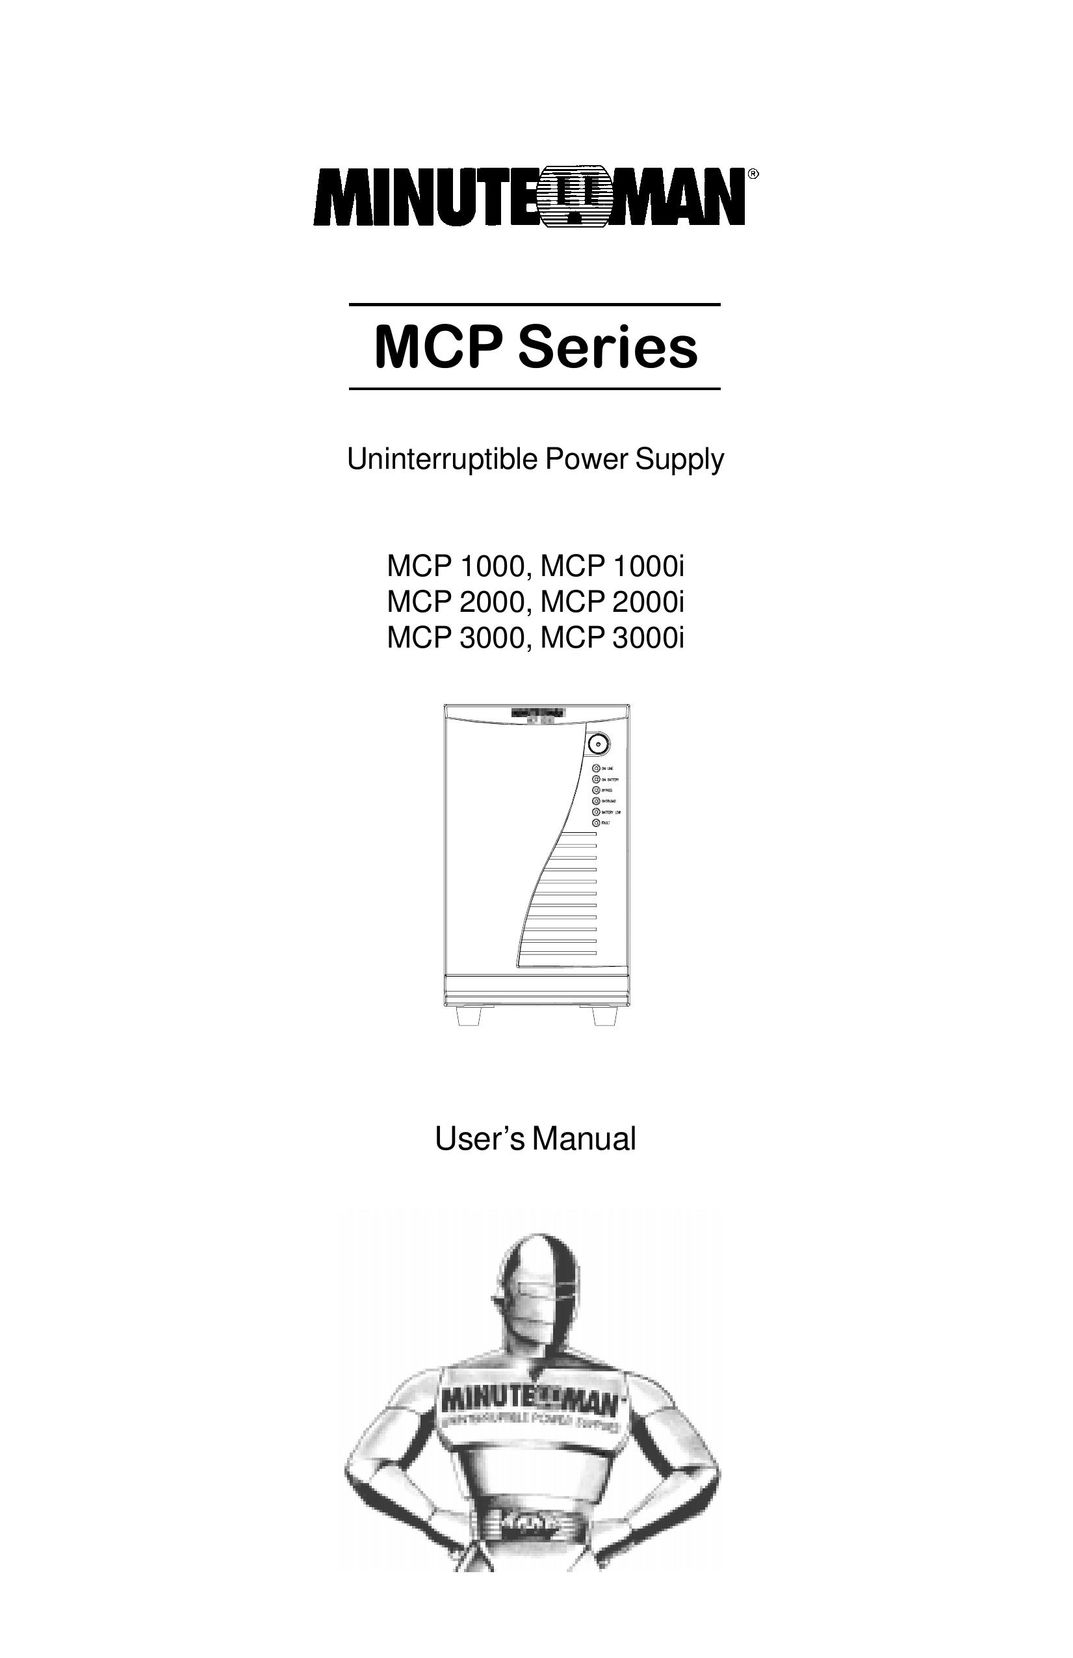 Minuteman UPS MCP 1000i Power Supply User Manual